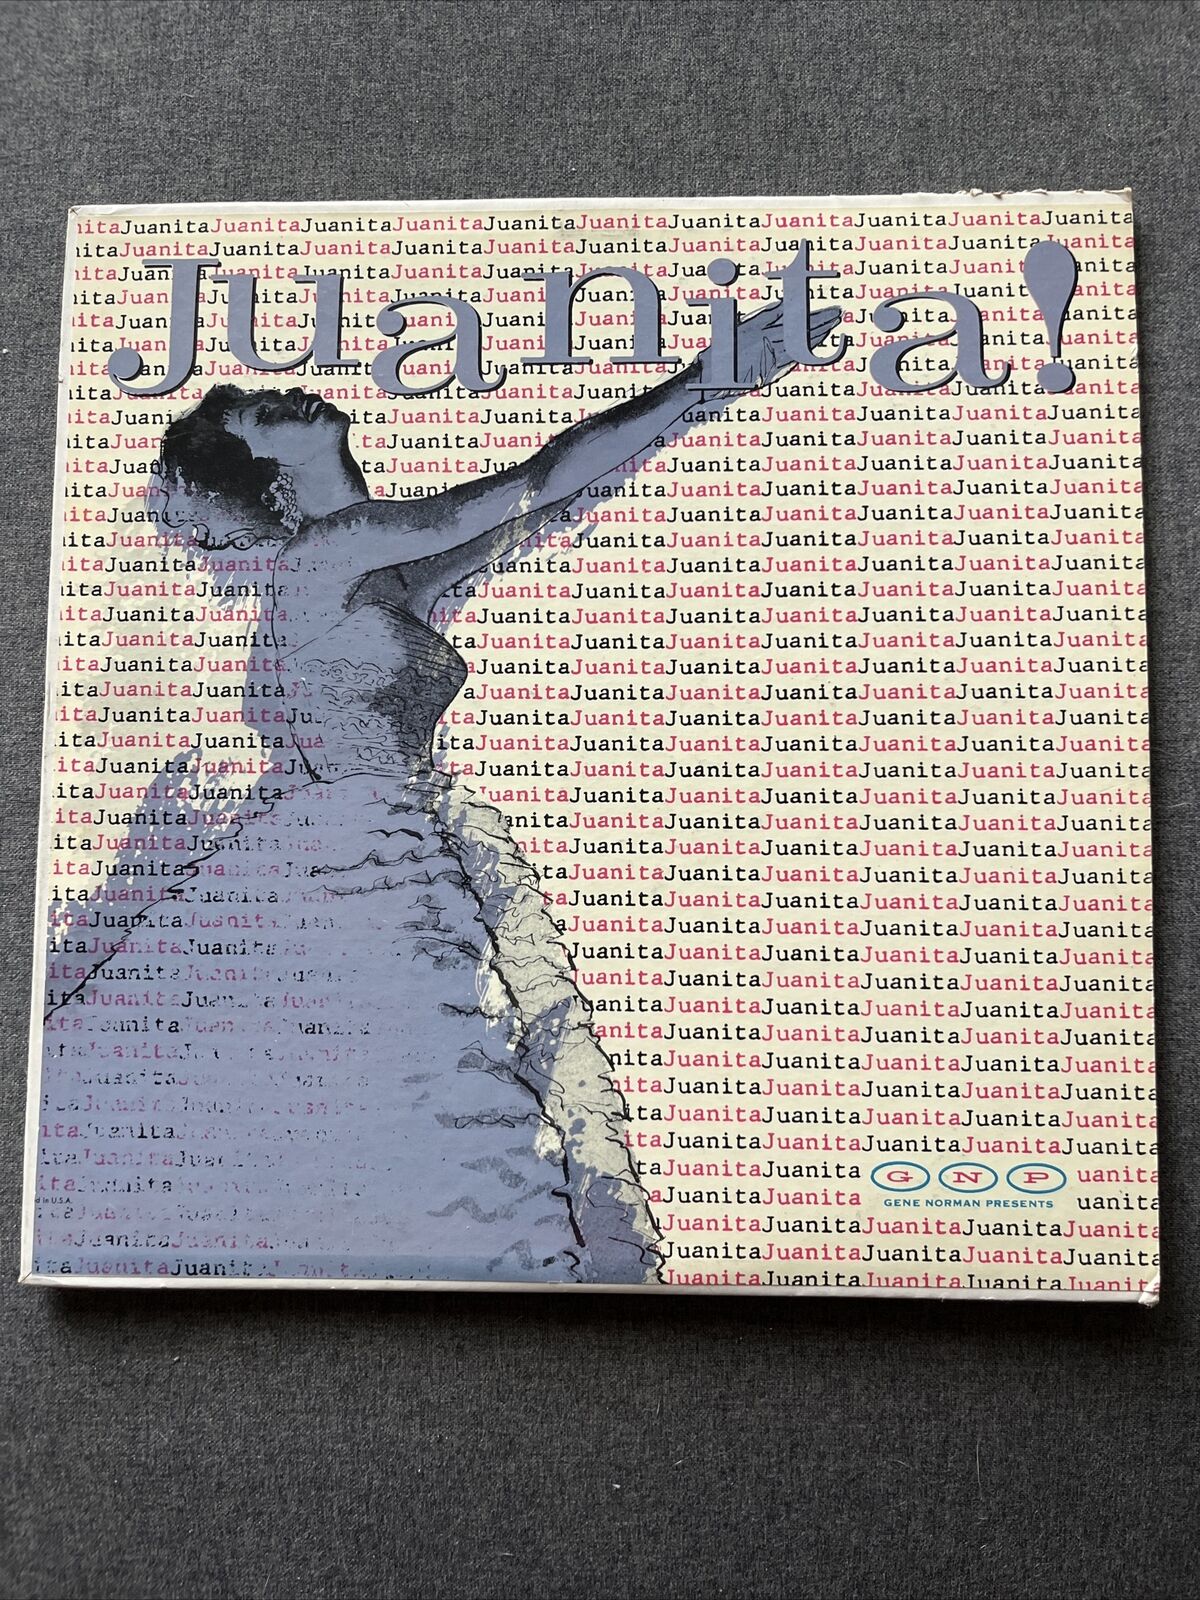 Juanita Featuring Juanita Cruse With Gerald Wiggins & His Orchestra Vinyl Record